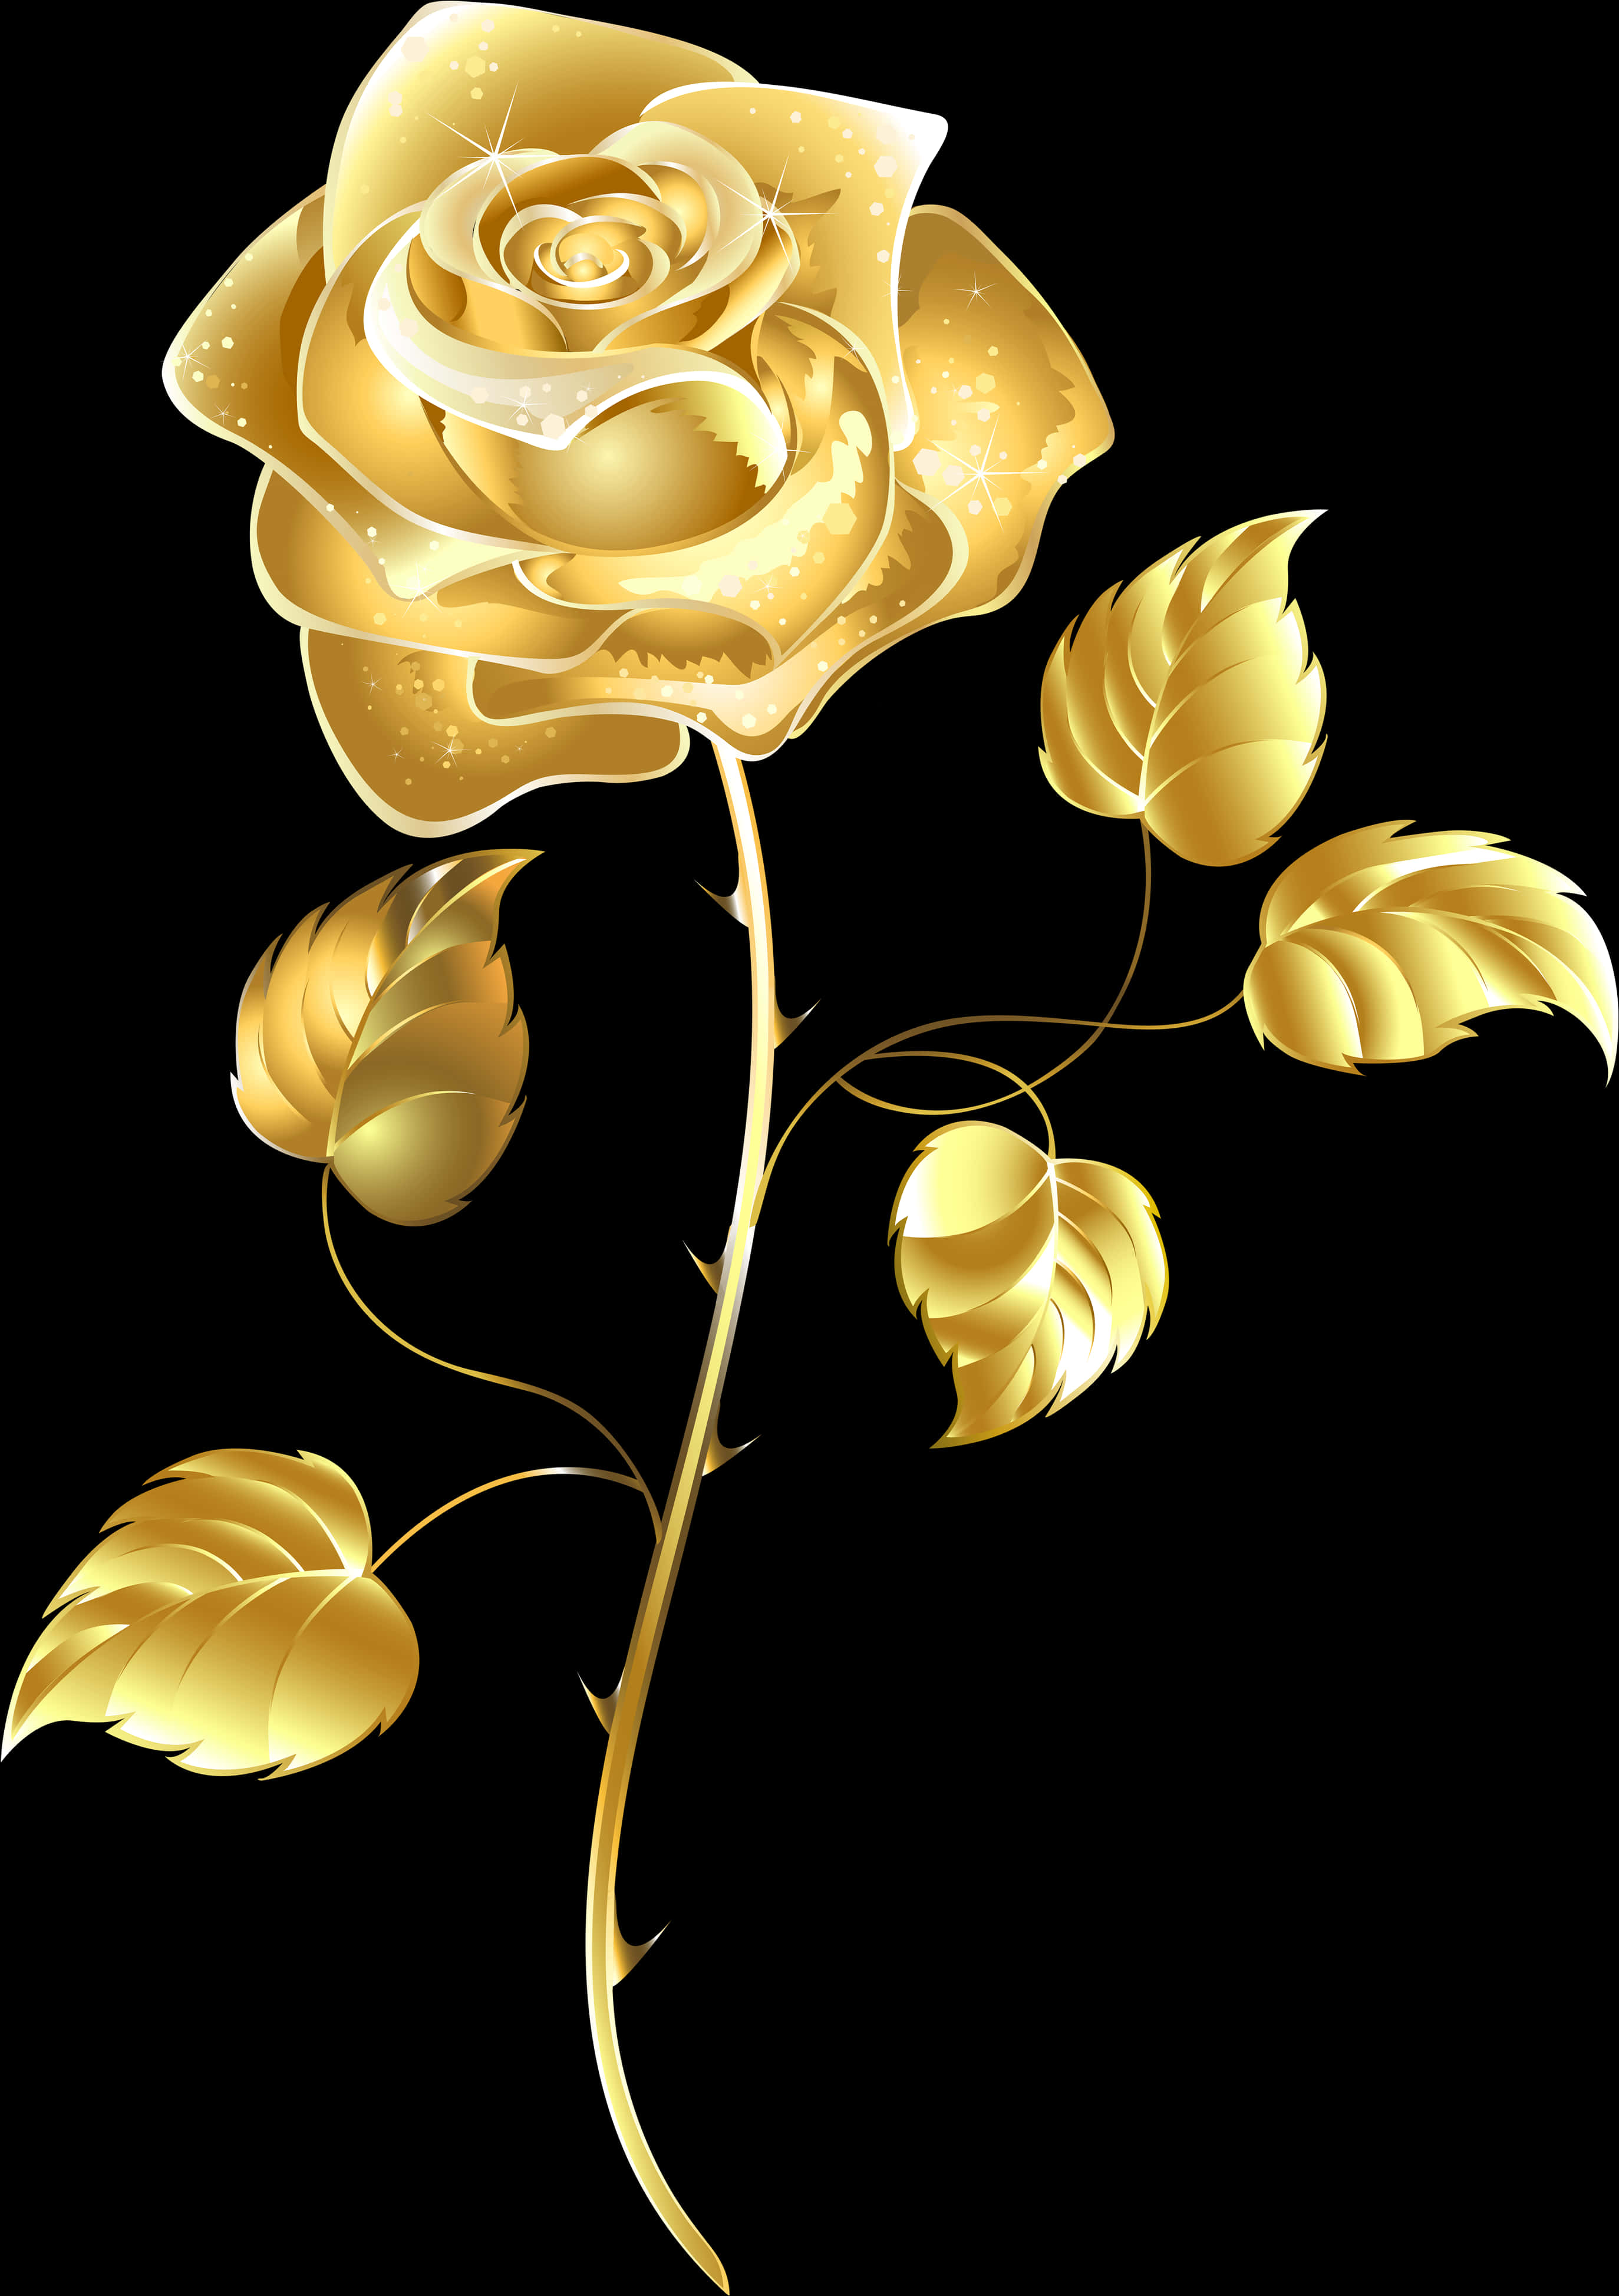 Elegant Golden Rose Artwork